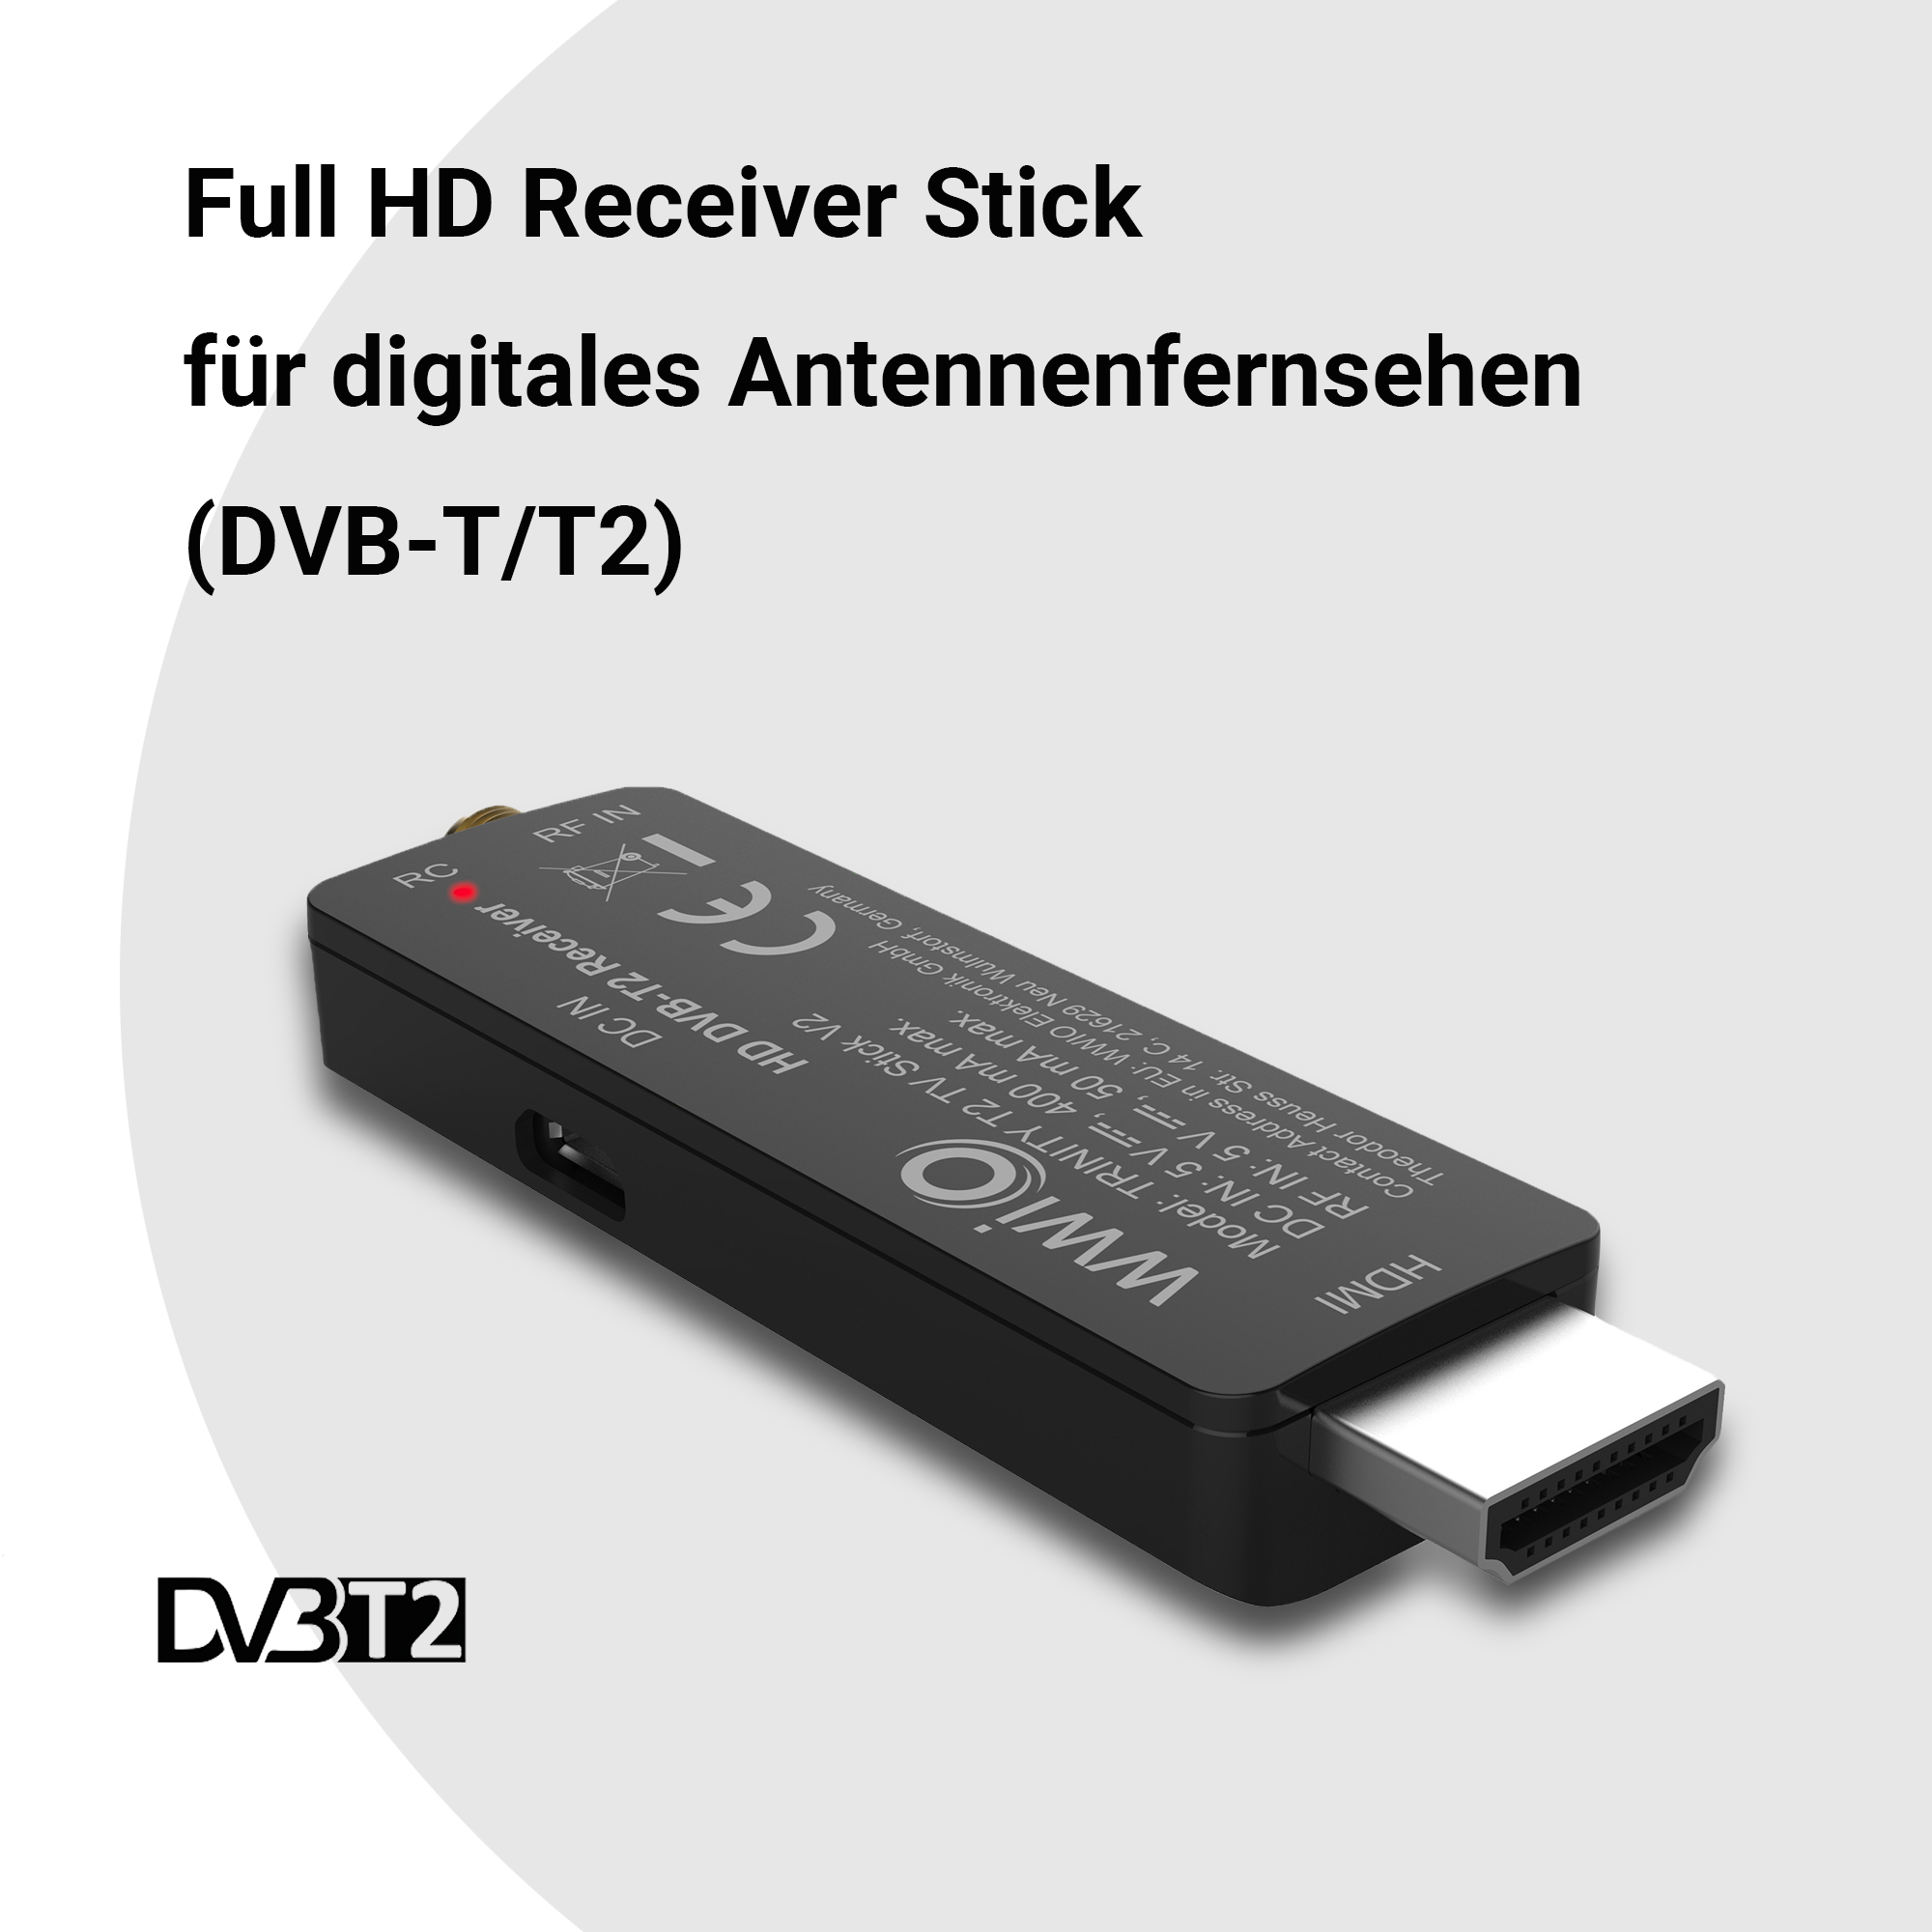 T2 TRINITY in Receiver DVB-T2 bis FULL HD 1920x1080 RCU 2 DVB-T2 Auflösung WWIO Kompakter WWIO 1 Stick Receiver TV Stick